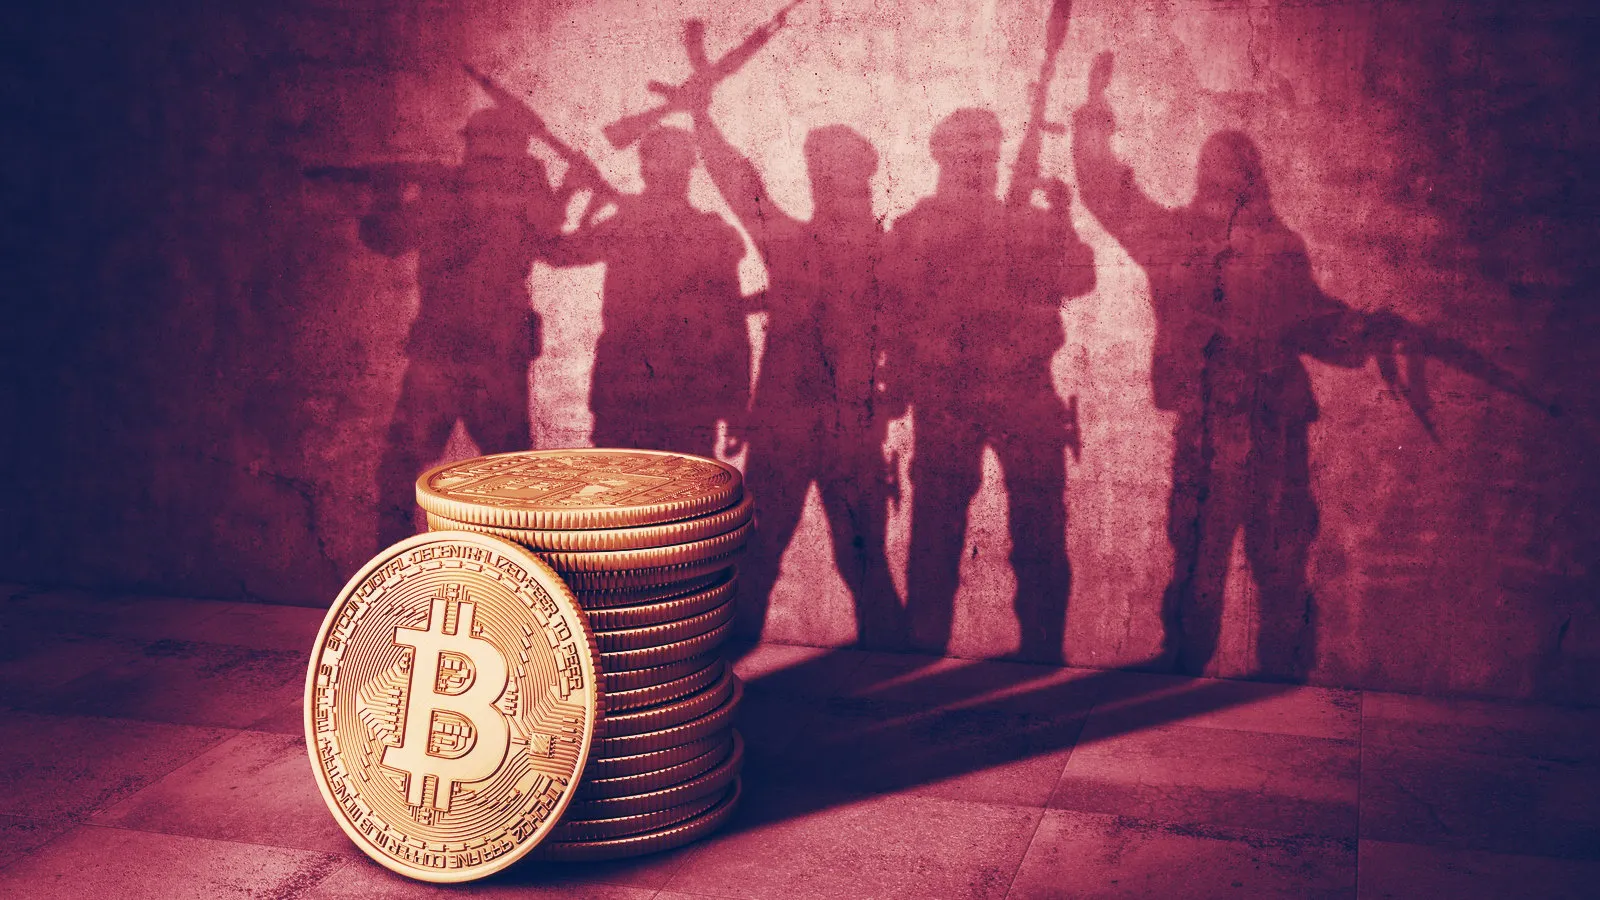 Crypto terrorism financing. Image: Shutterstock